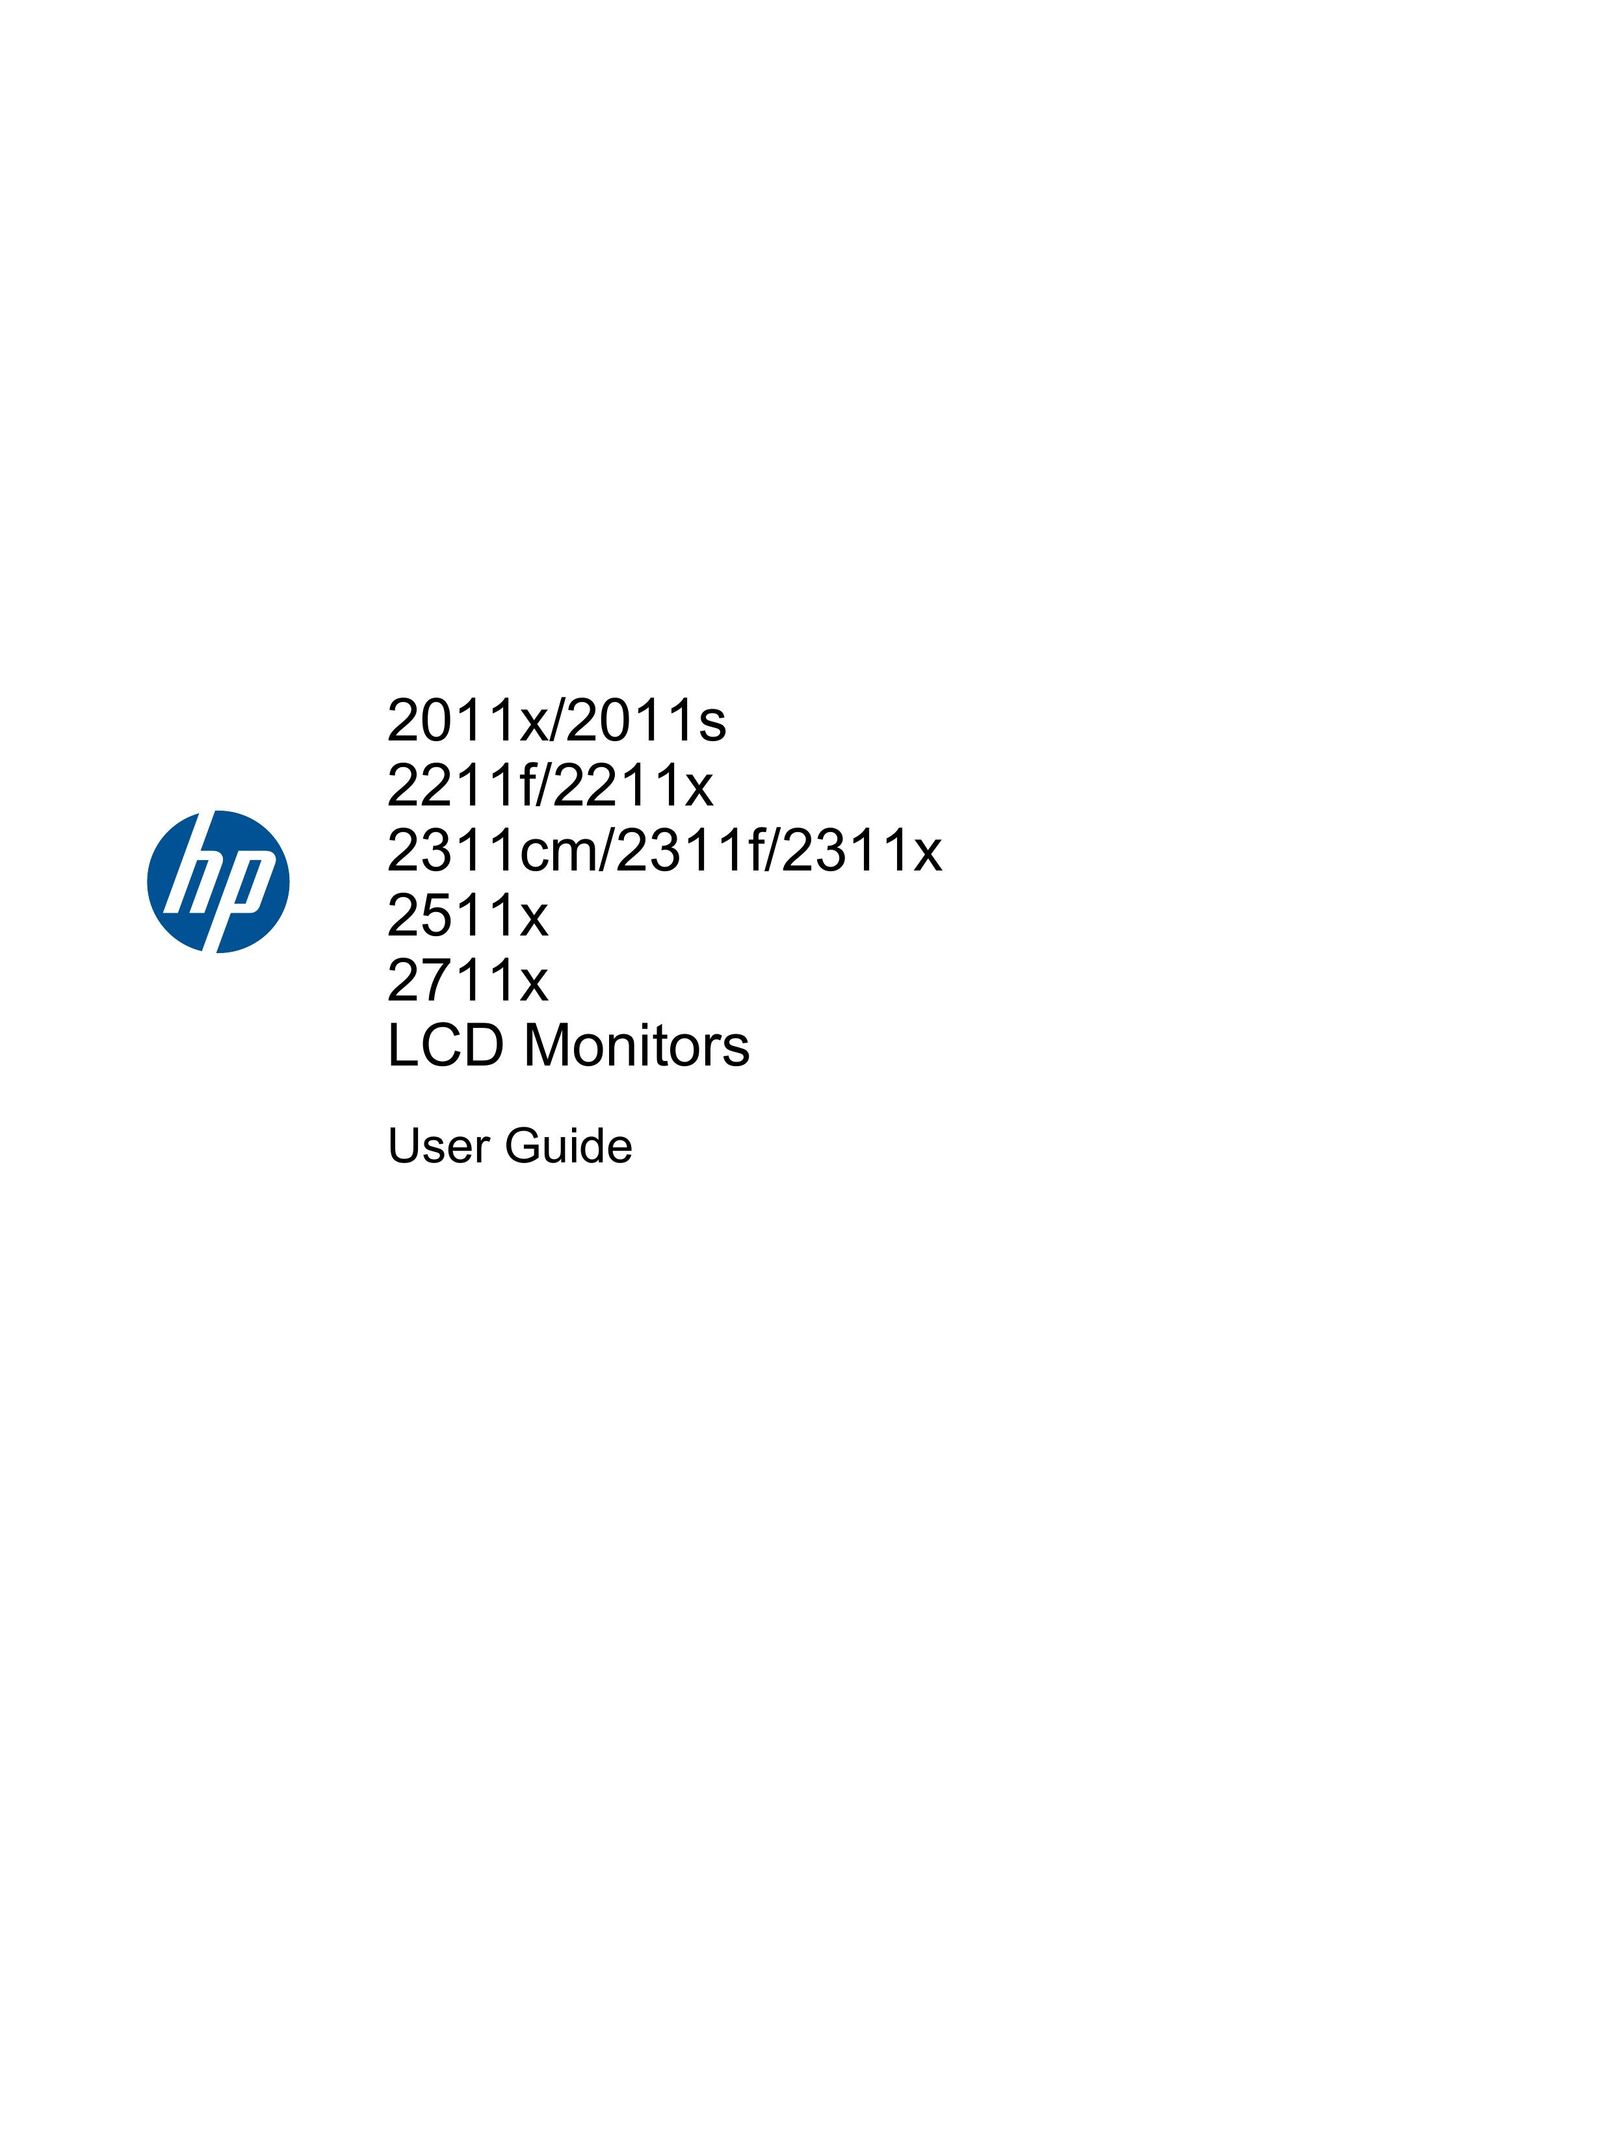 HP (Hewlett-Packard) 2011x/2011s Car Video System User Manual